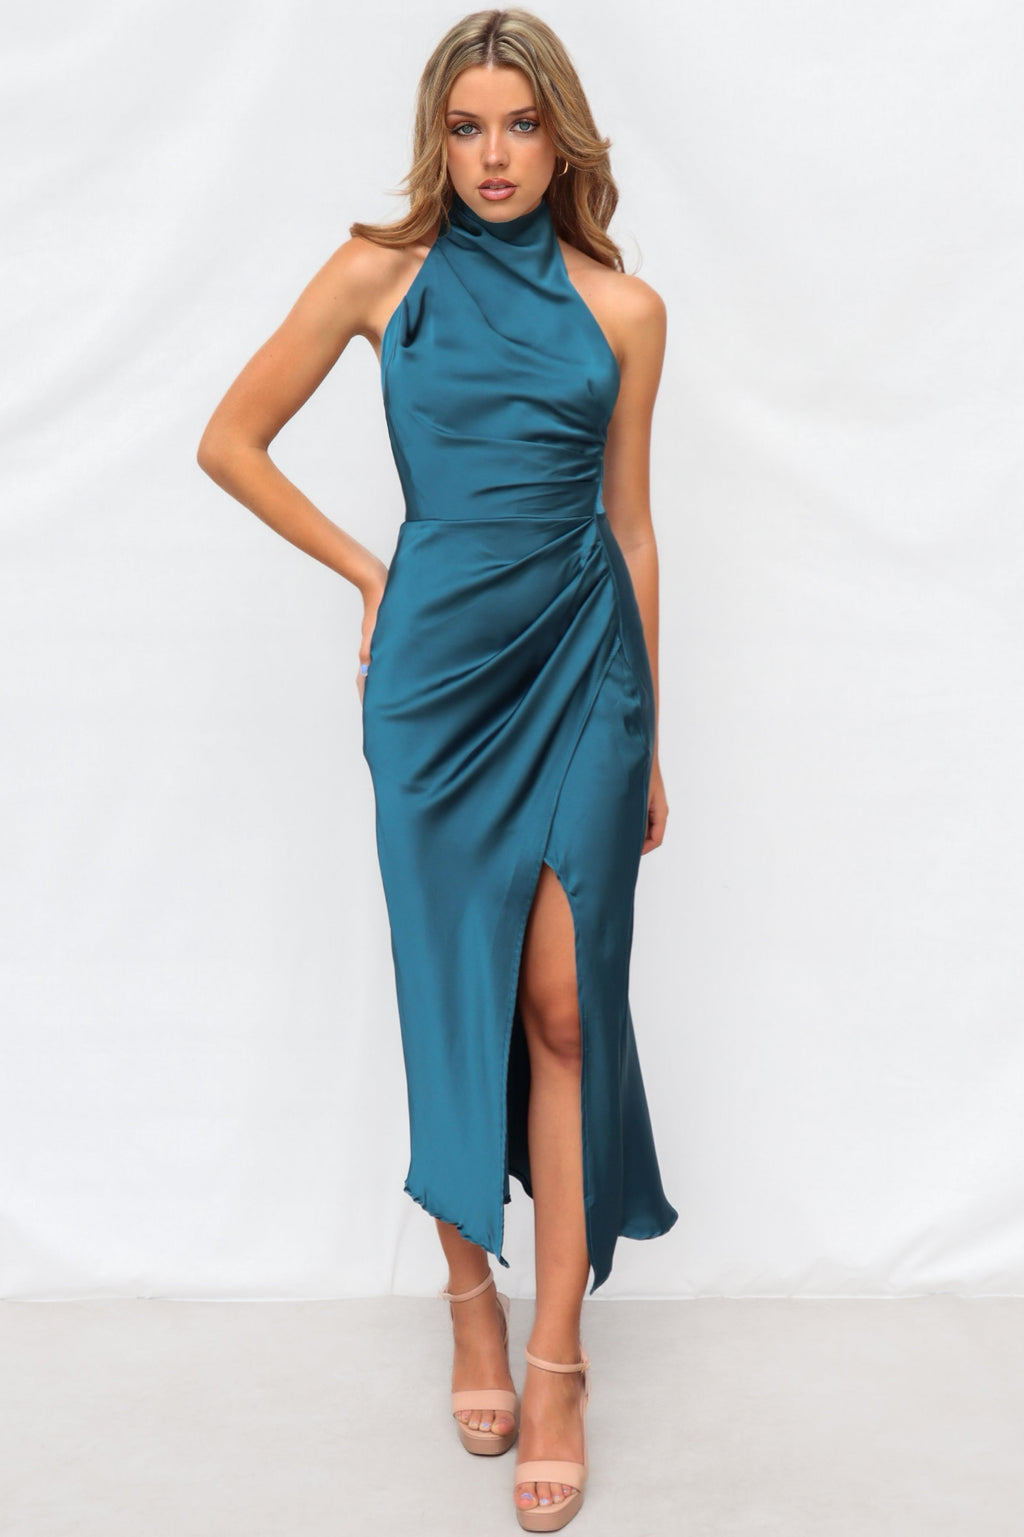 Runway Goddess Dresses | Party Dress, Semi Formal Dress, Evening Gown